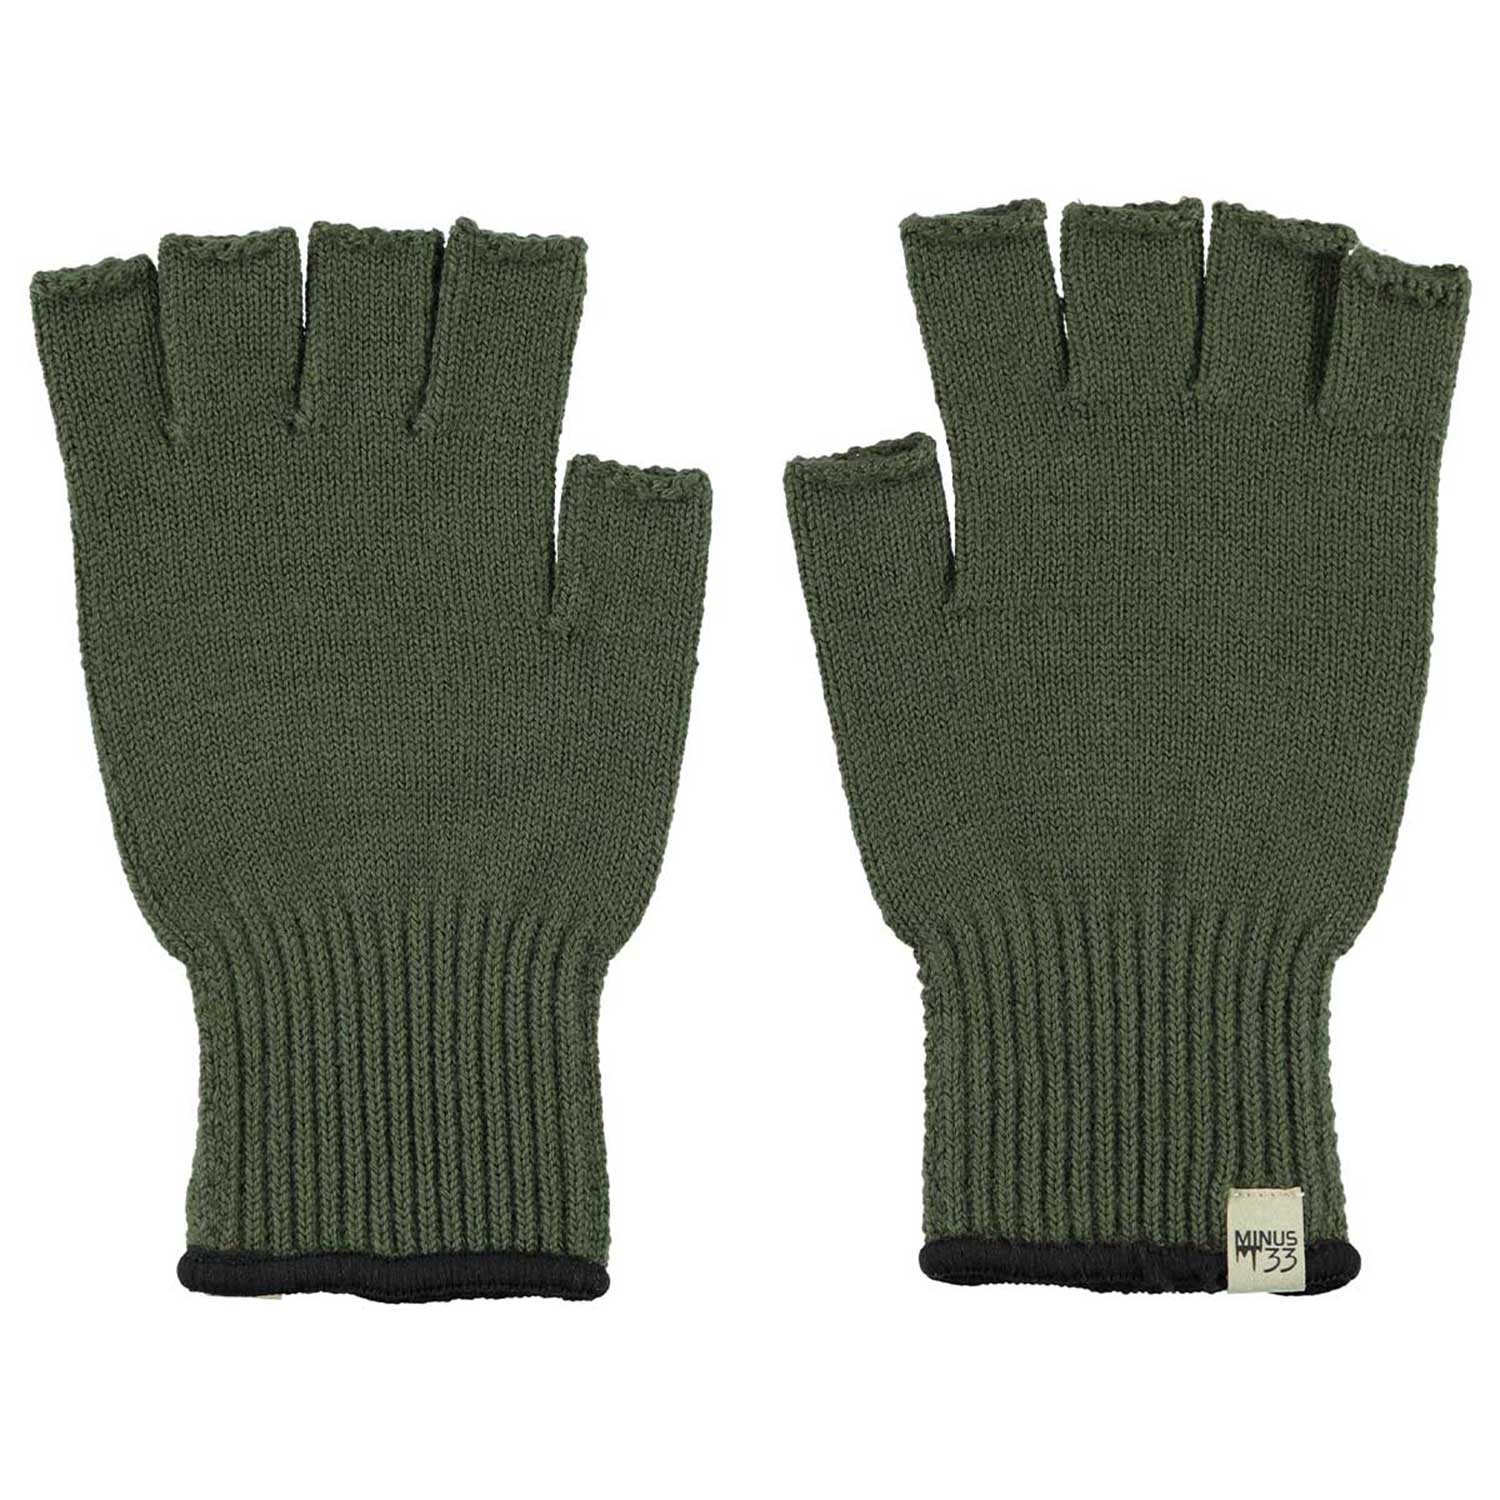 Minus 33 Fingerless Glove Liner | Boundary Waters Catalog